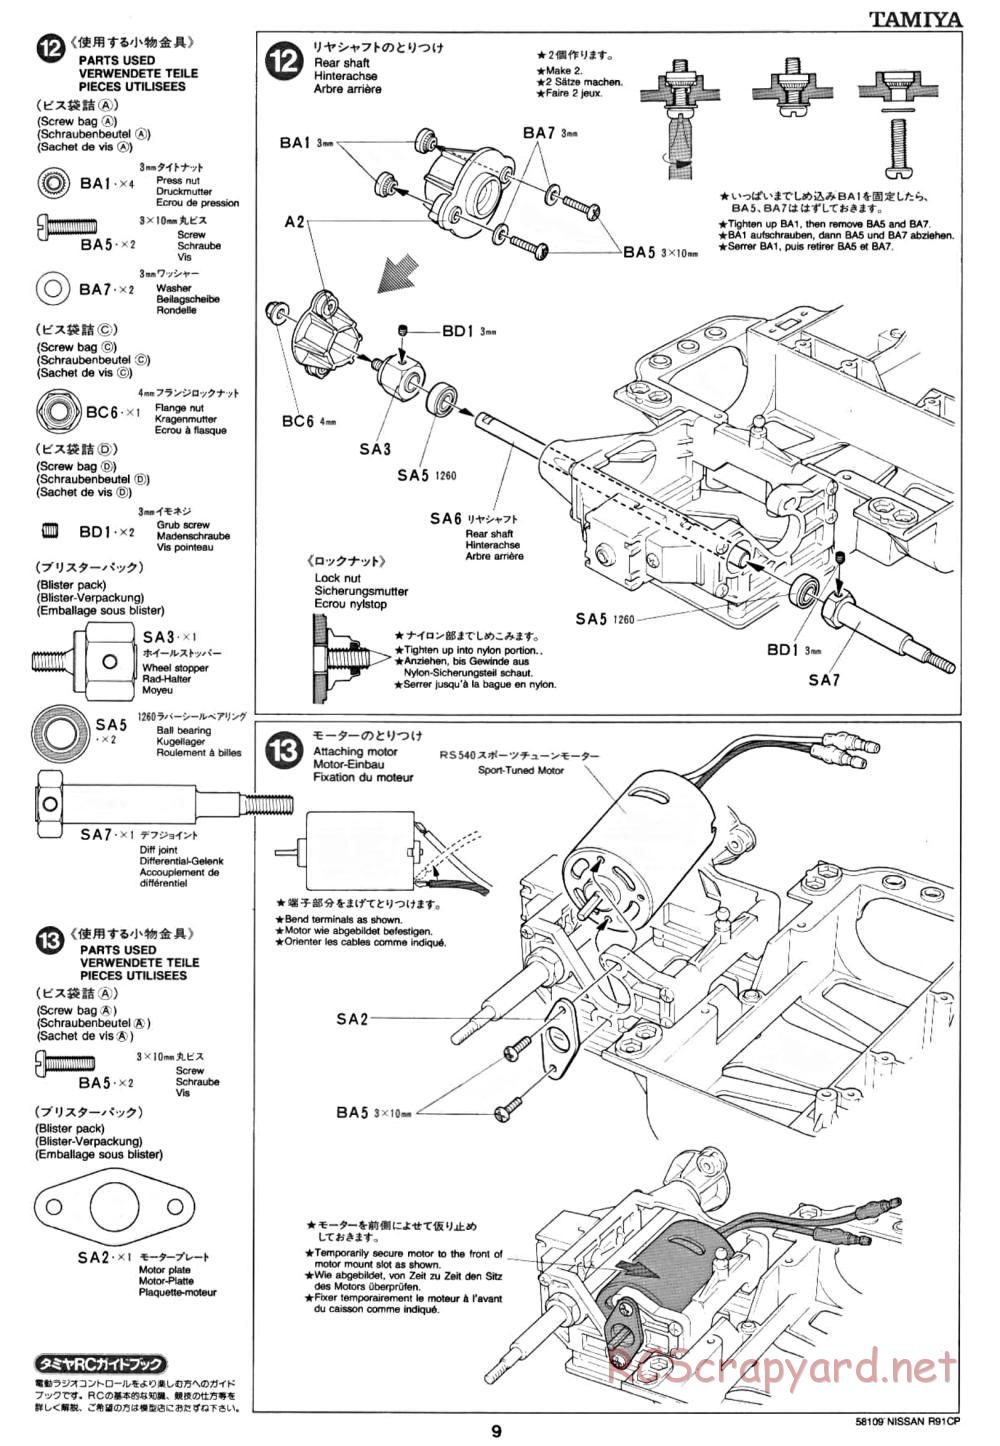 Tamiya - Nissan R91CP - Group-C Chassis - Manual - Page 9